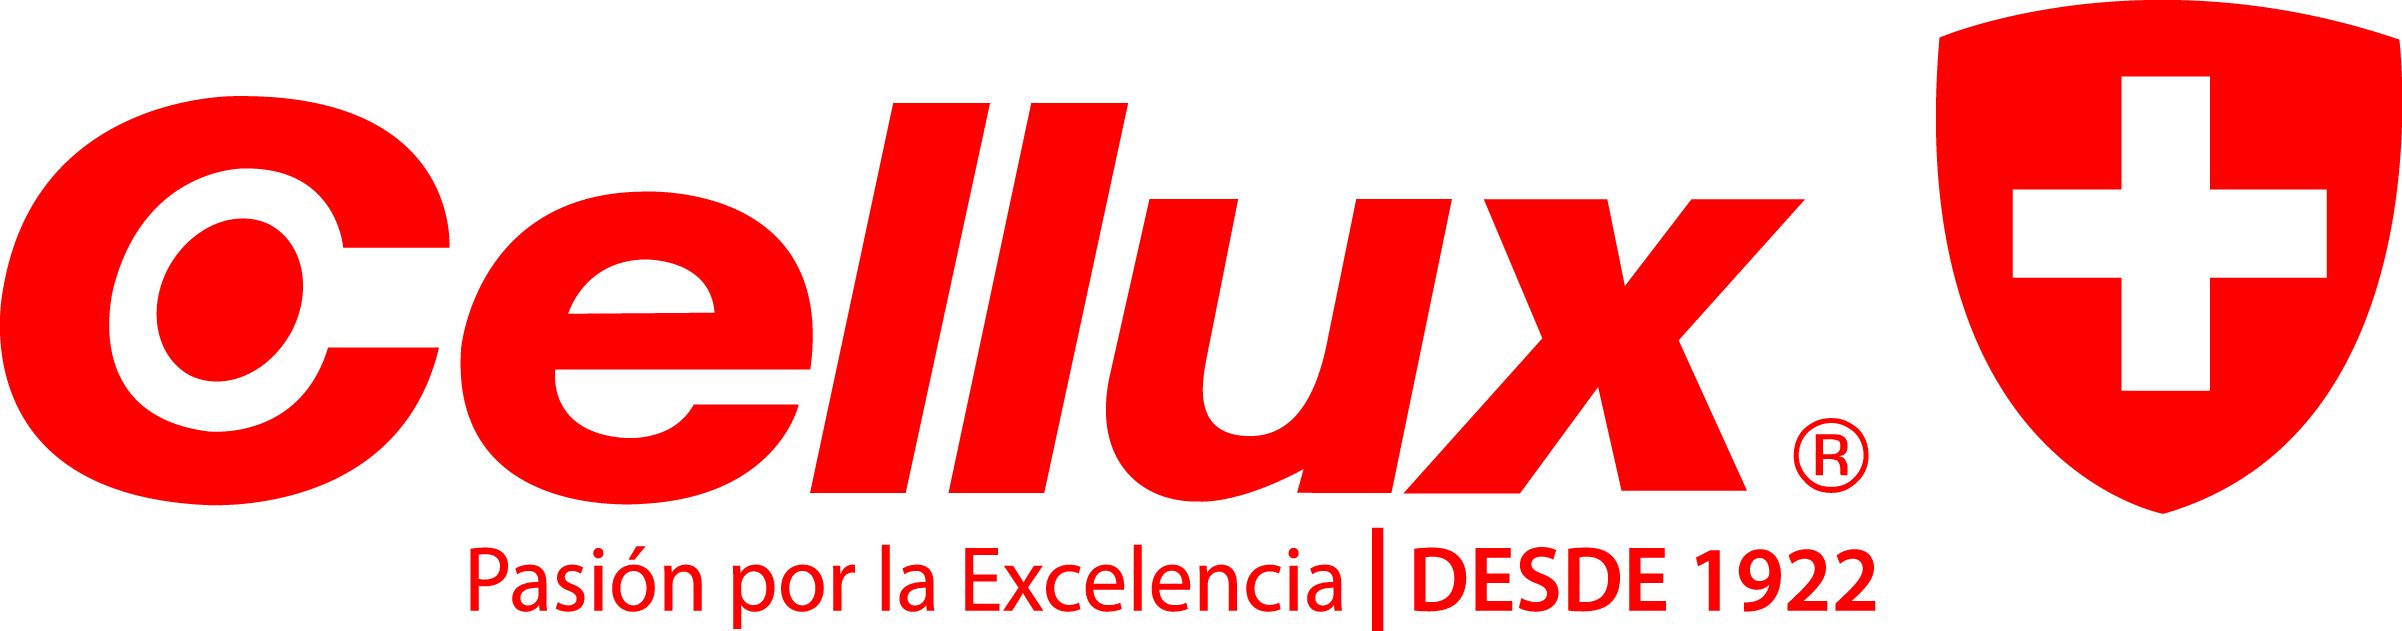 logo-cellux-rojo.png